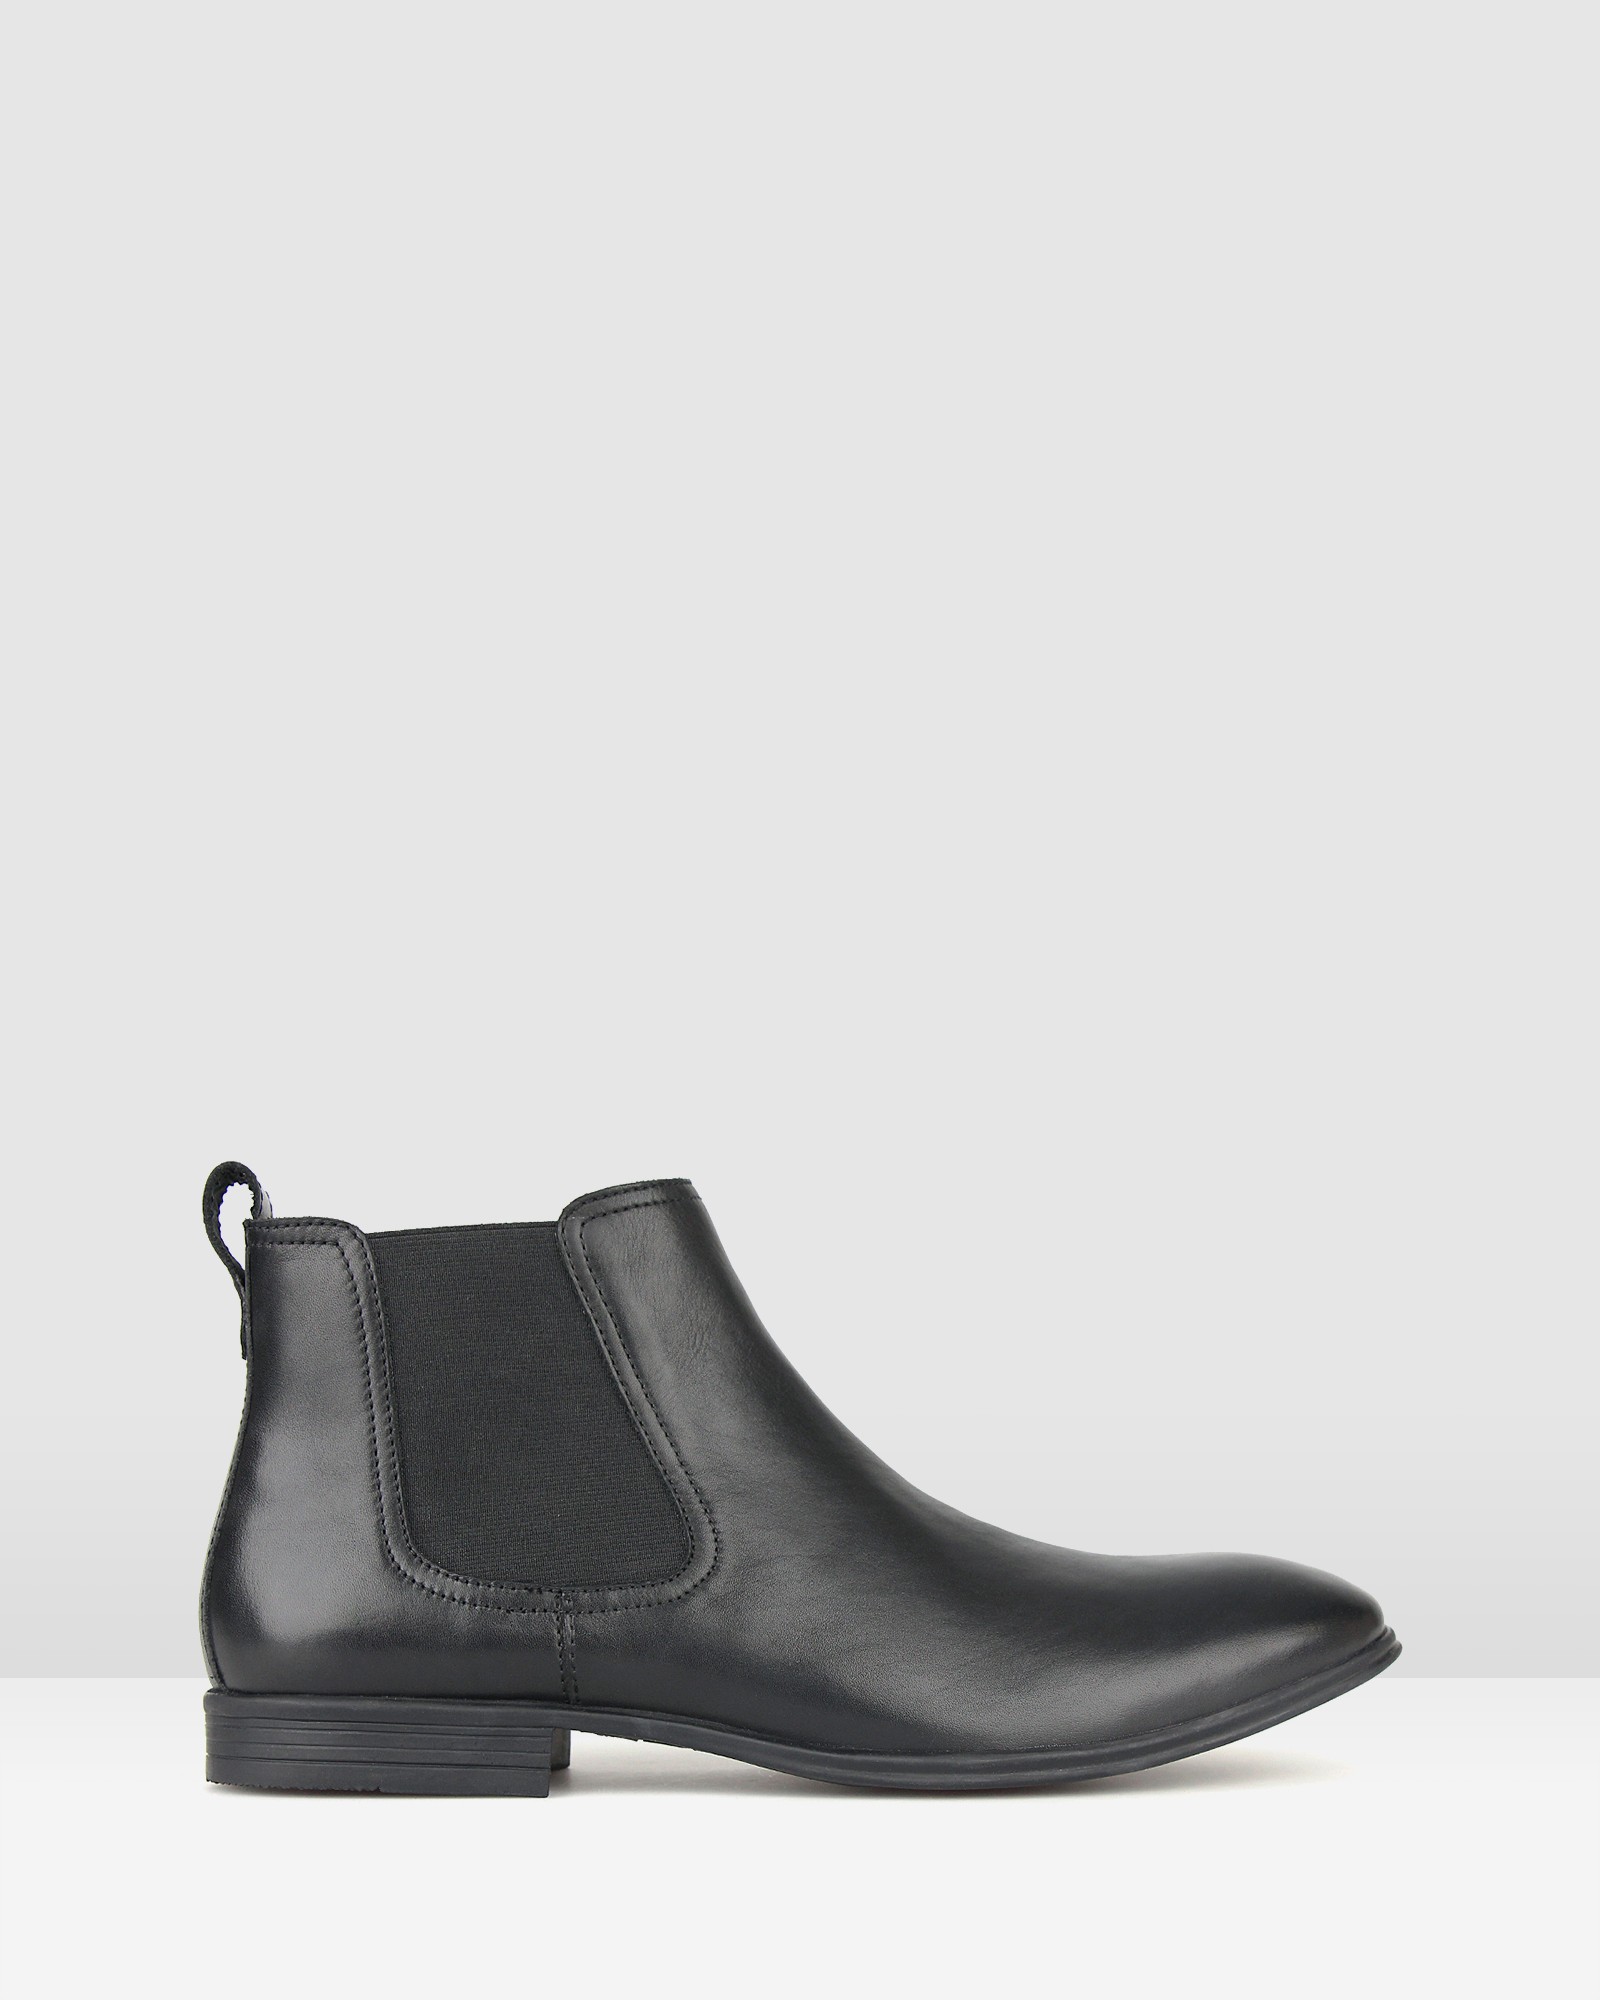 West Leather Chelsea Boots Black by Airflex | ShoeSales